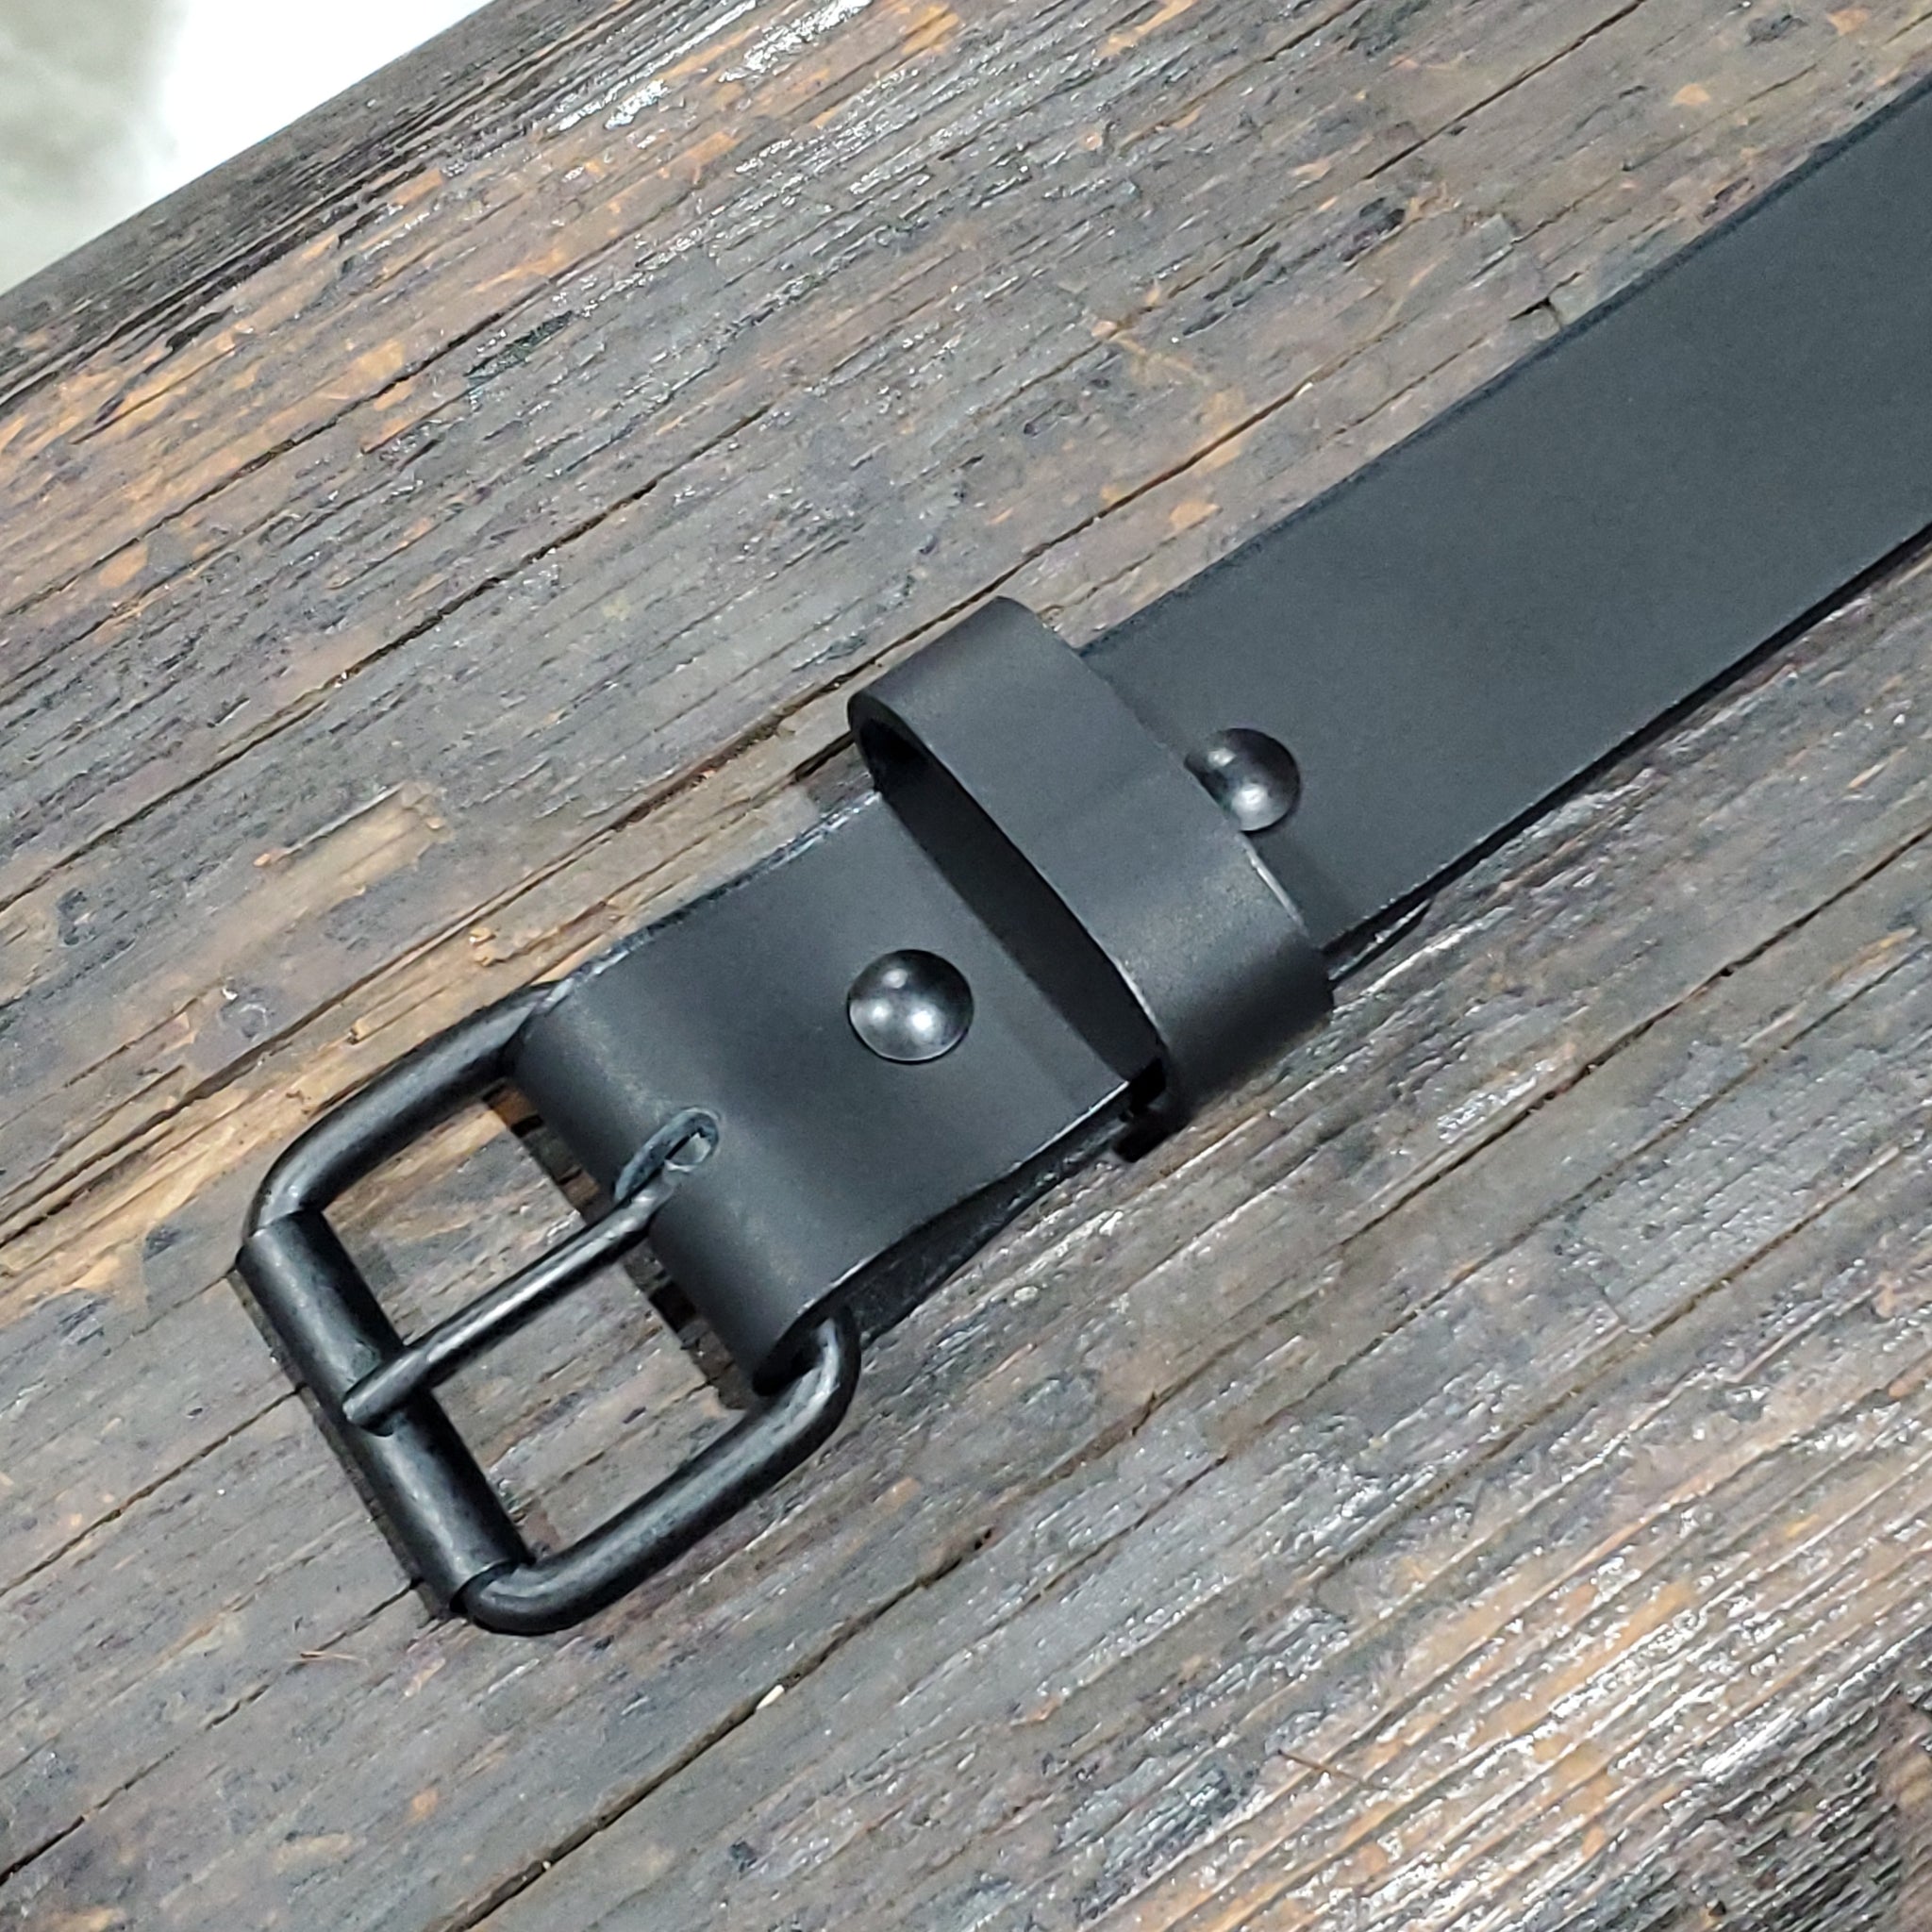 The Huntsman - Full Grain Leather Black Belt - Made in USA - Men's Leather  Belt at  Men's Clothing store